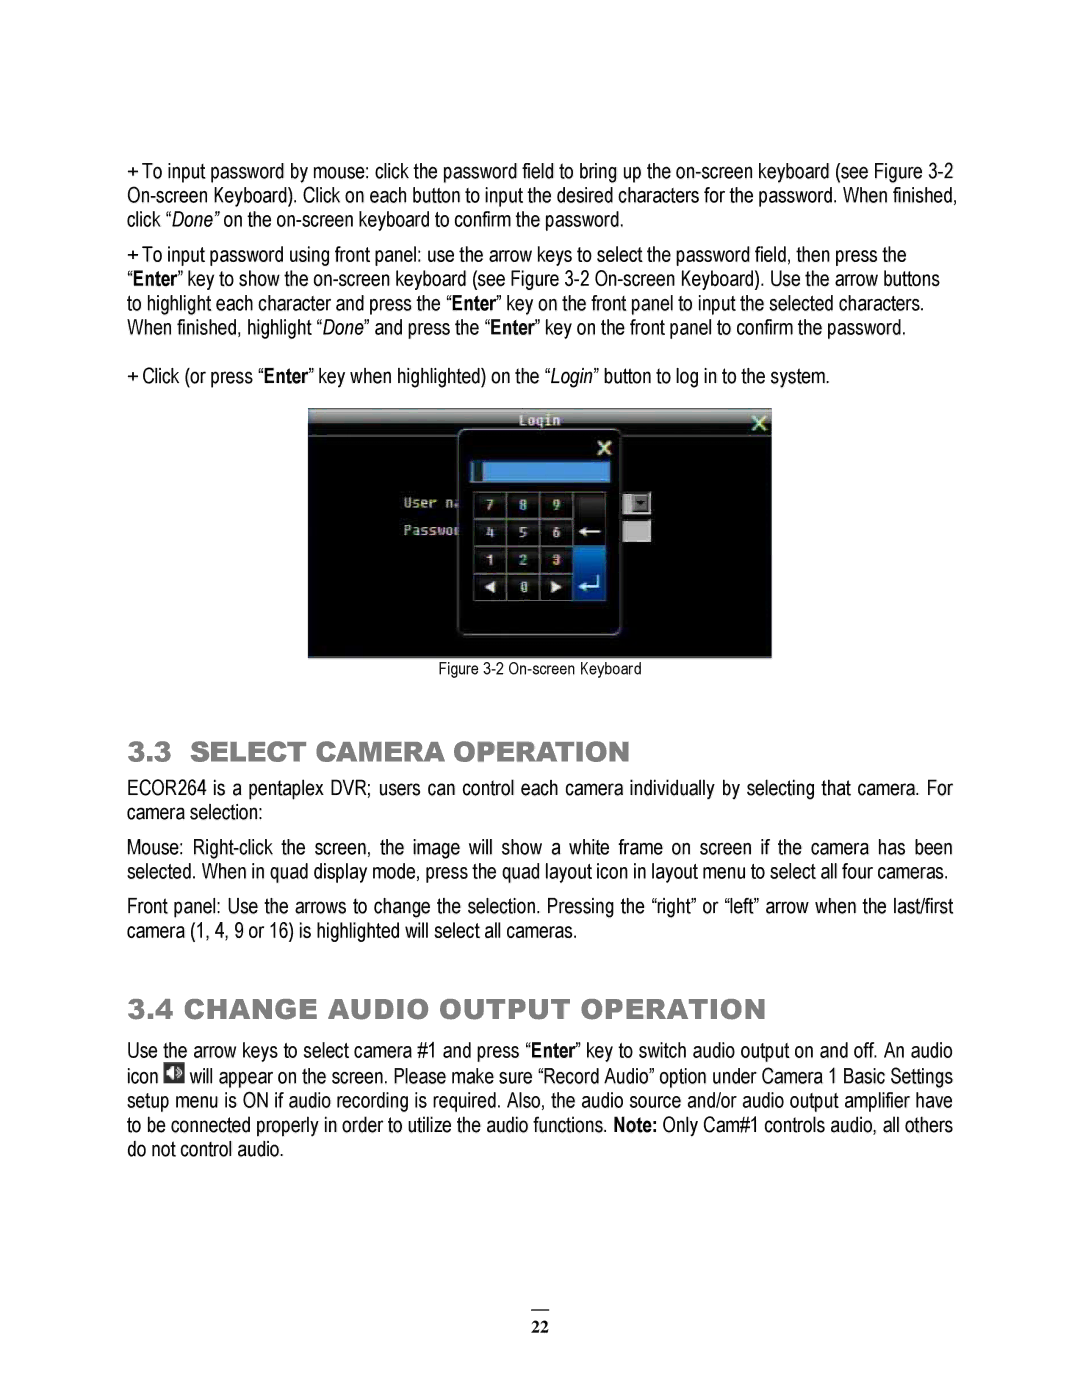 EverFocus ECOR264-9X1, ECOR264-4X1, ECOR264-16X1 user manual Select Camera Operation, Change Audio Output Operation 